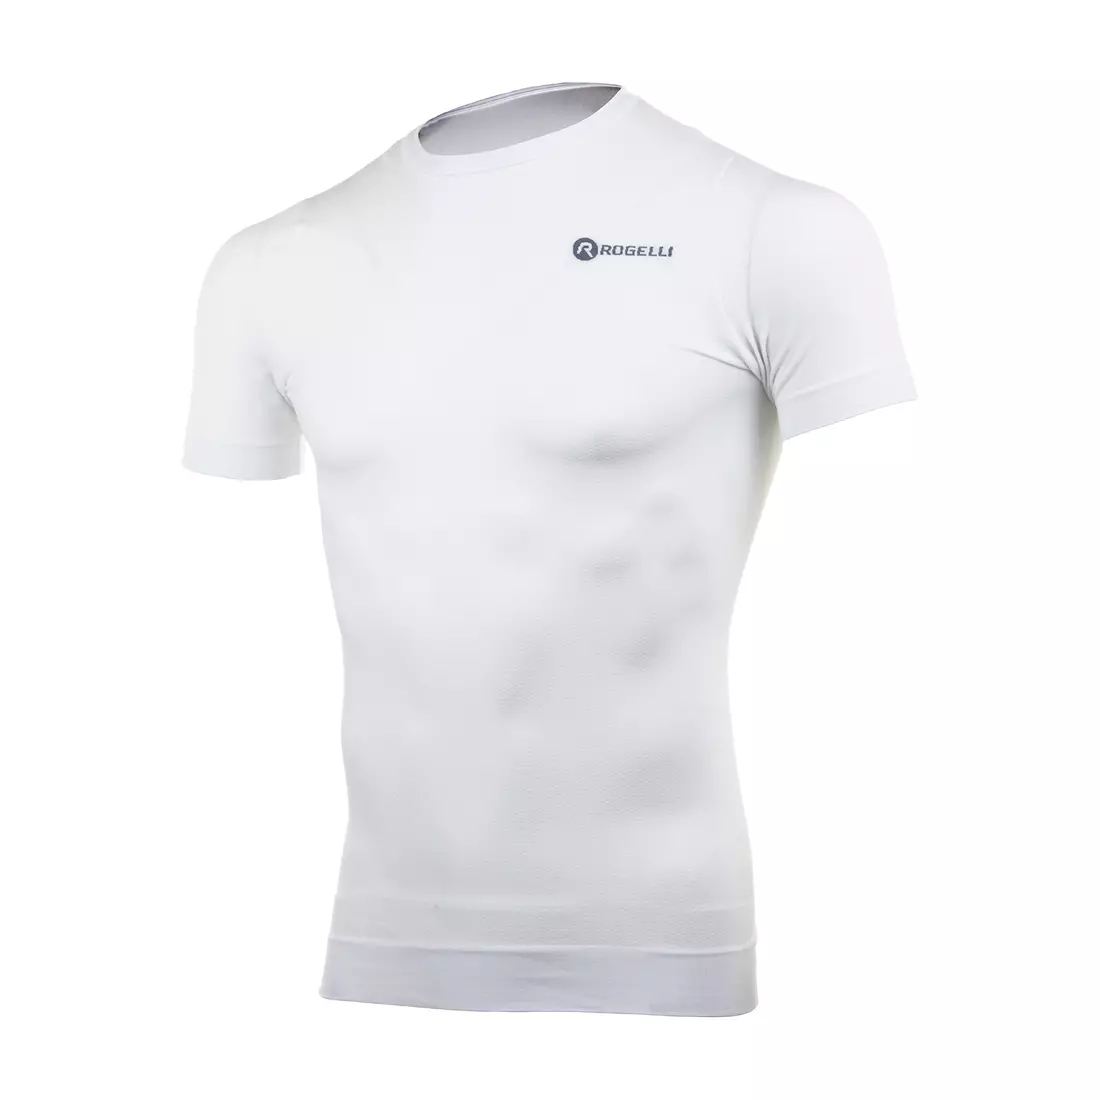 ROGELLI Herren-Sweatshirt CHASE white 070.007